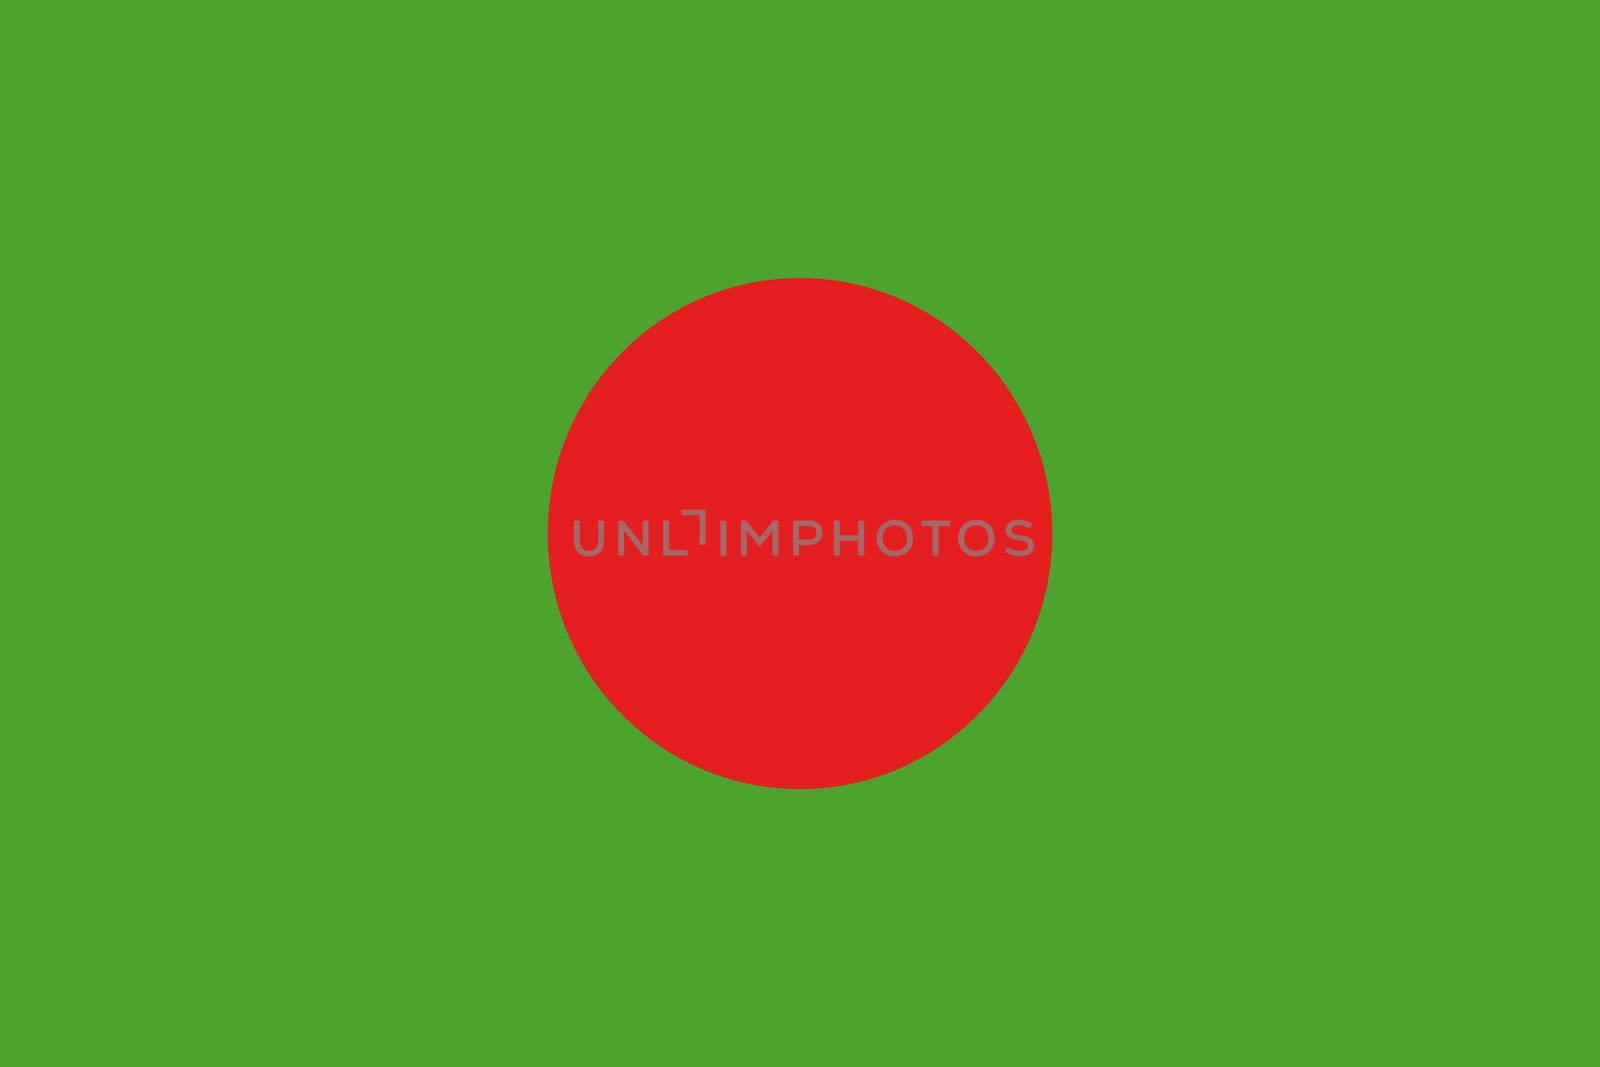 An illustration of the flag of Bangladesh